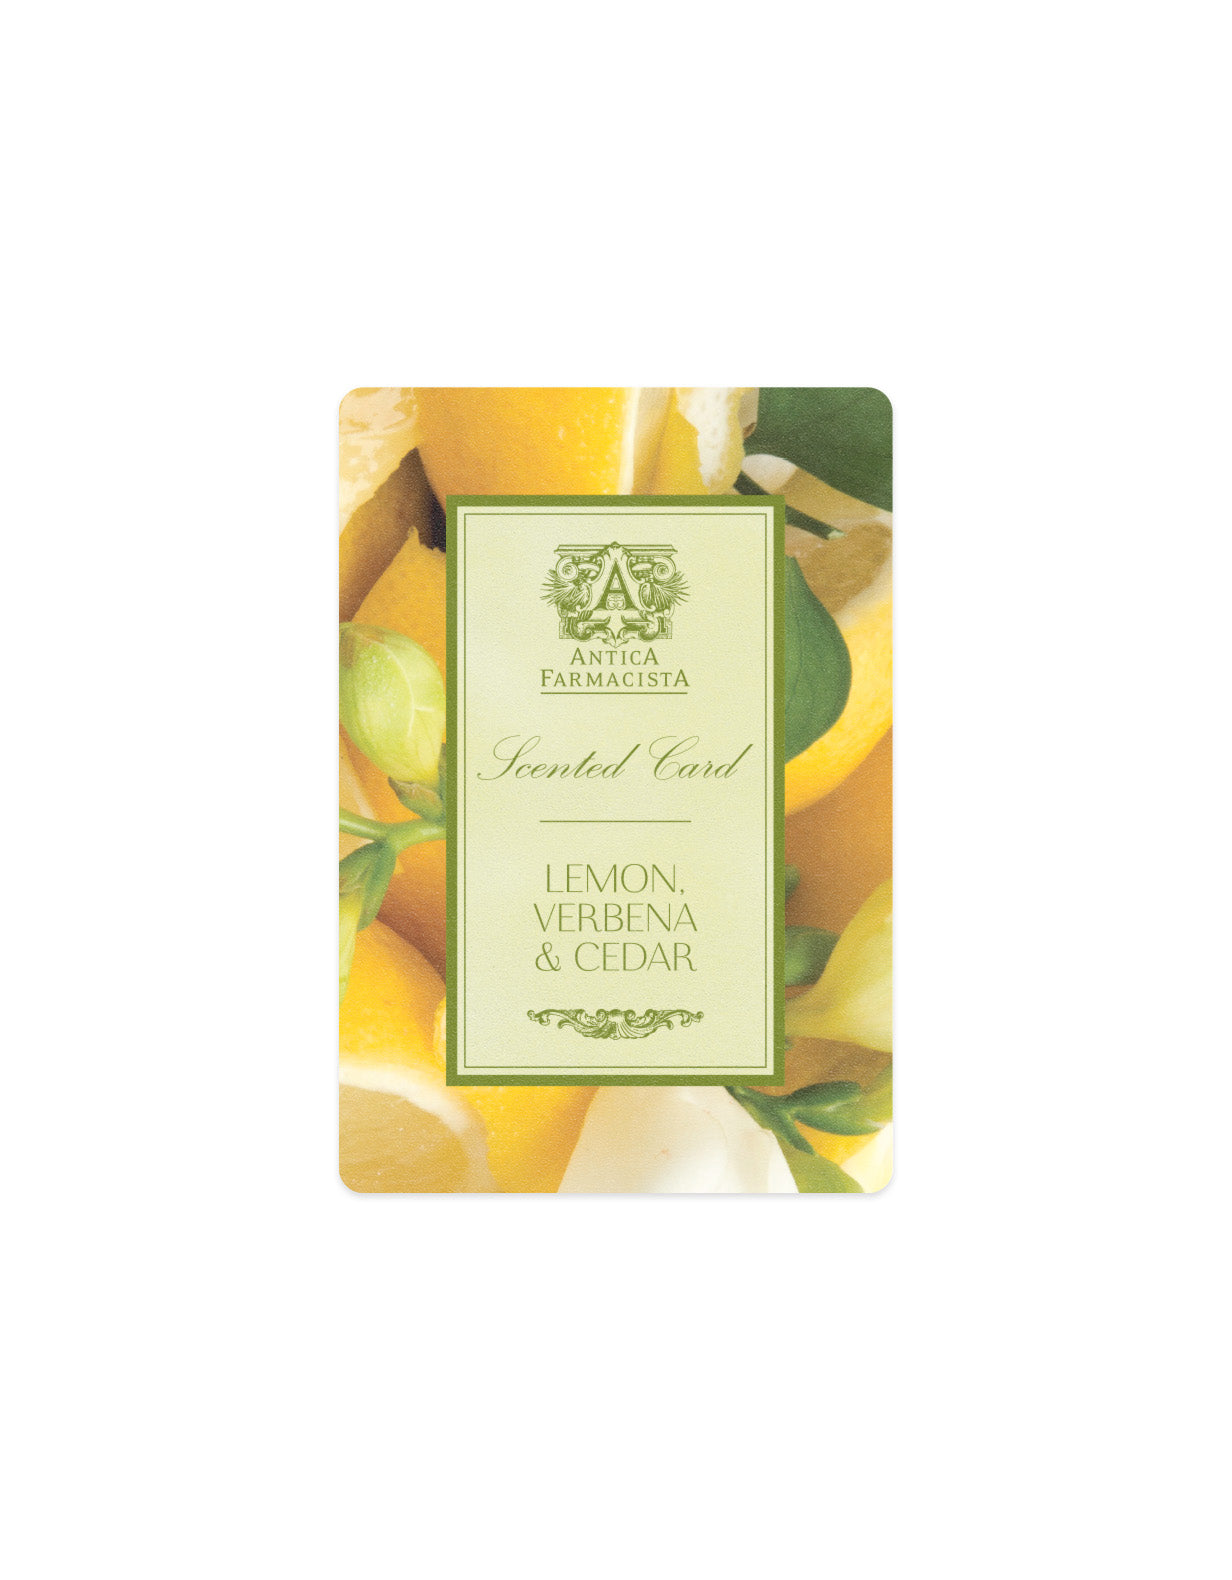 Scented Card - Lemon, Verbena & Cedar